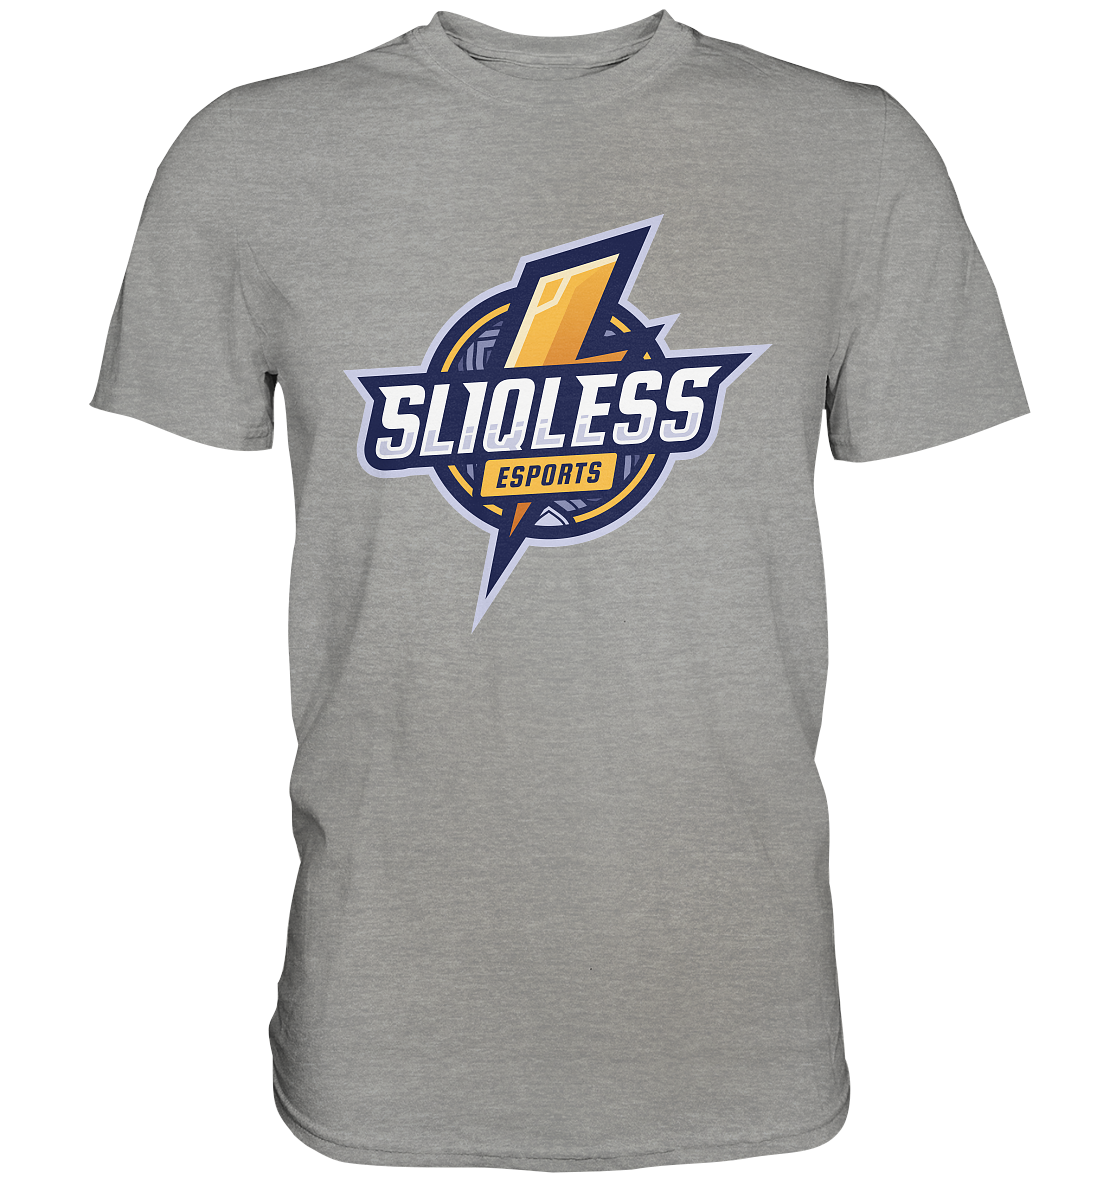 SLIQLESS ESPORTS - Basic Shirt